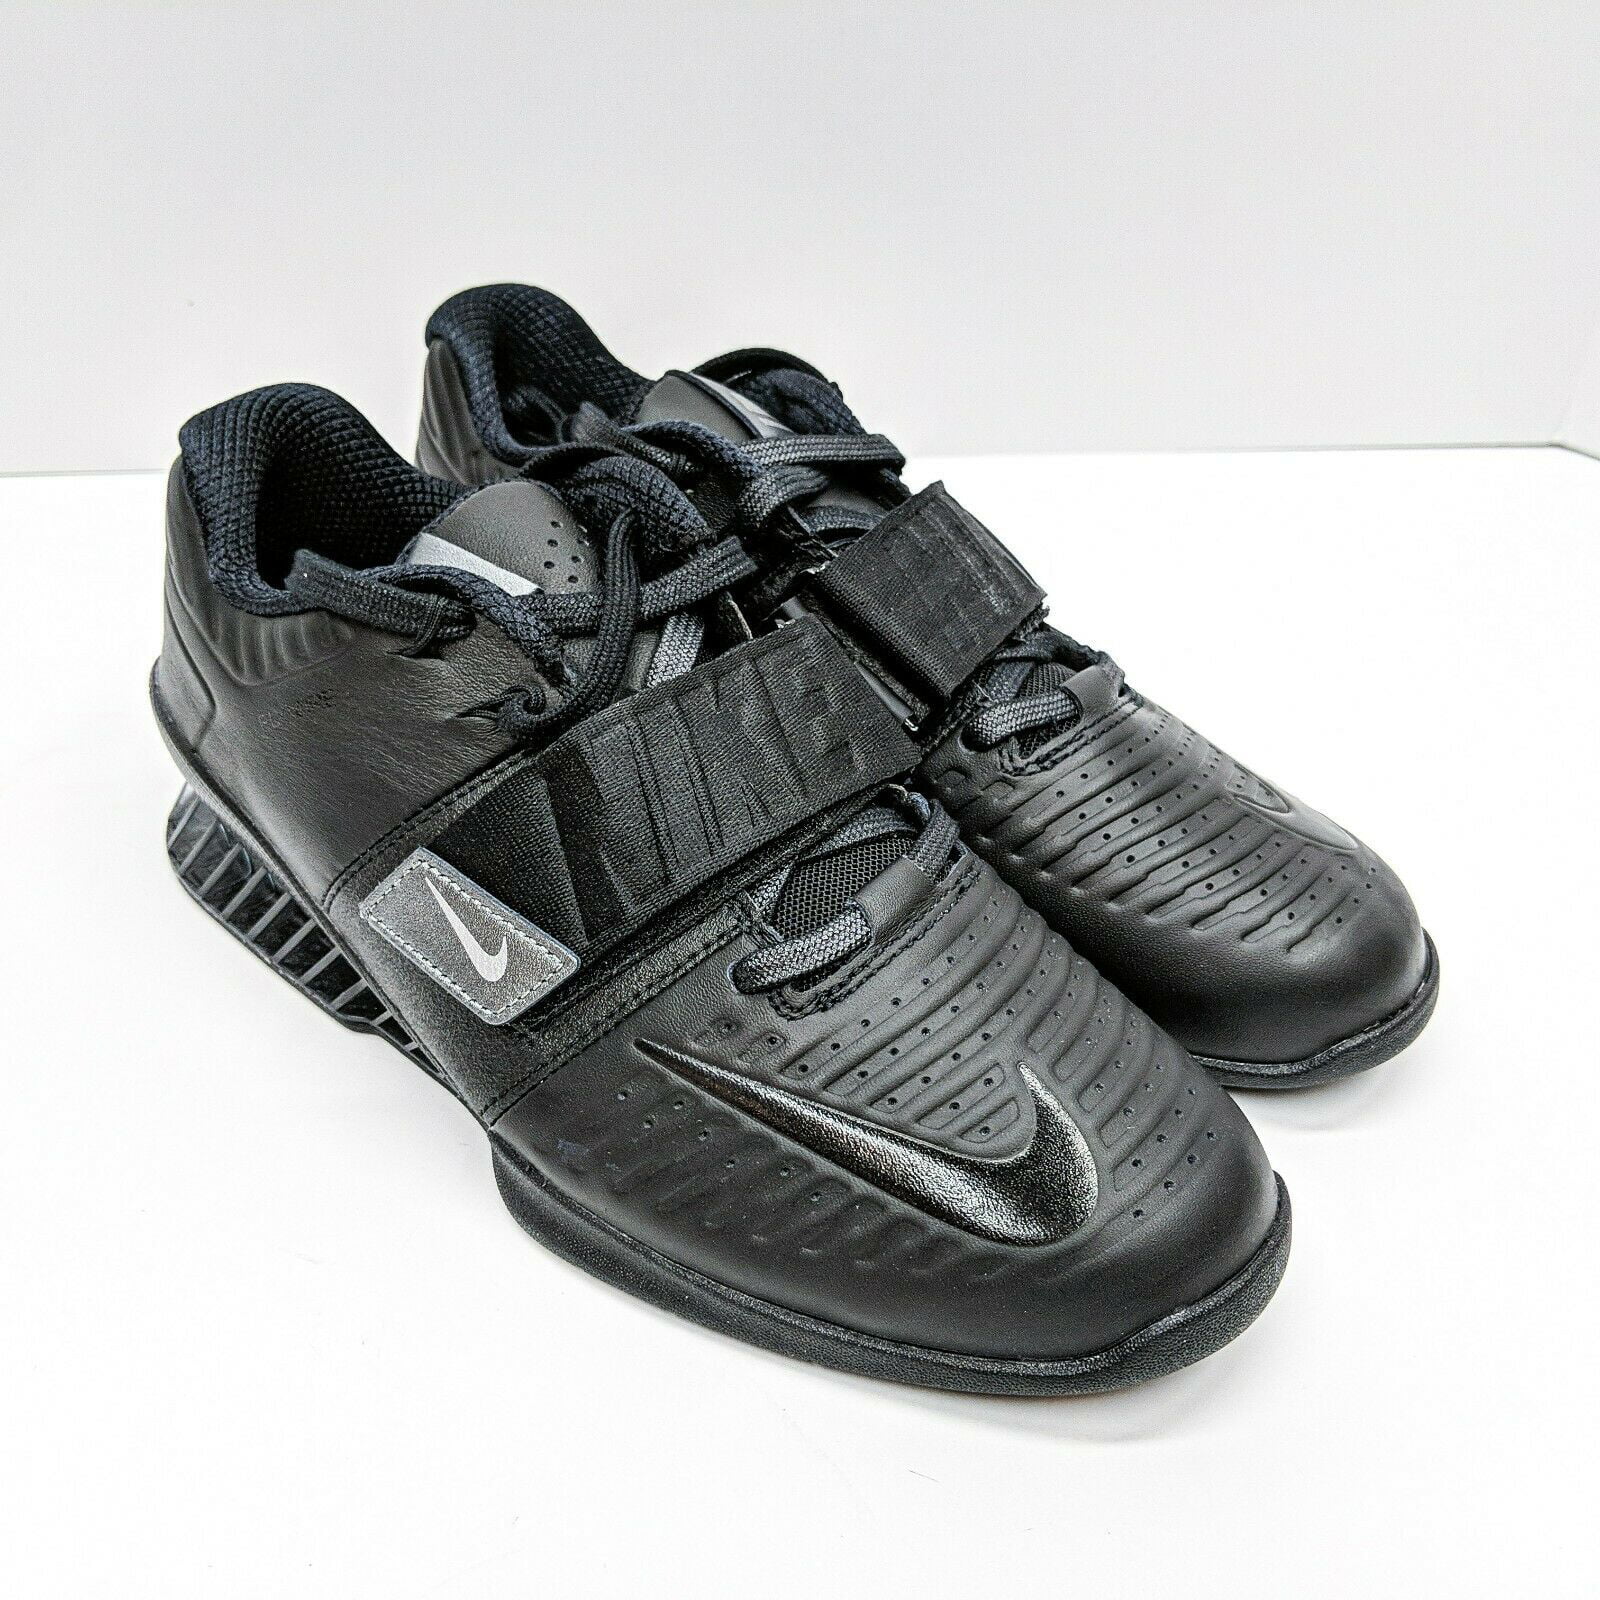 Nike Men's Romaleos Weightlifting Shoes - Walmart.com